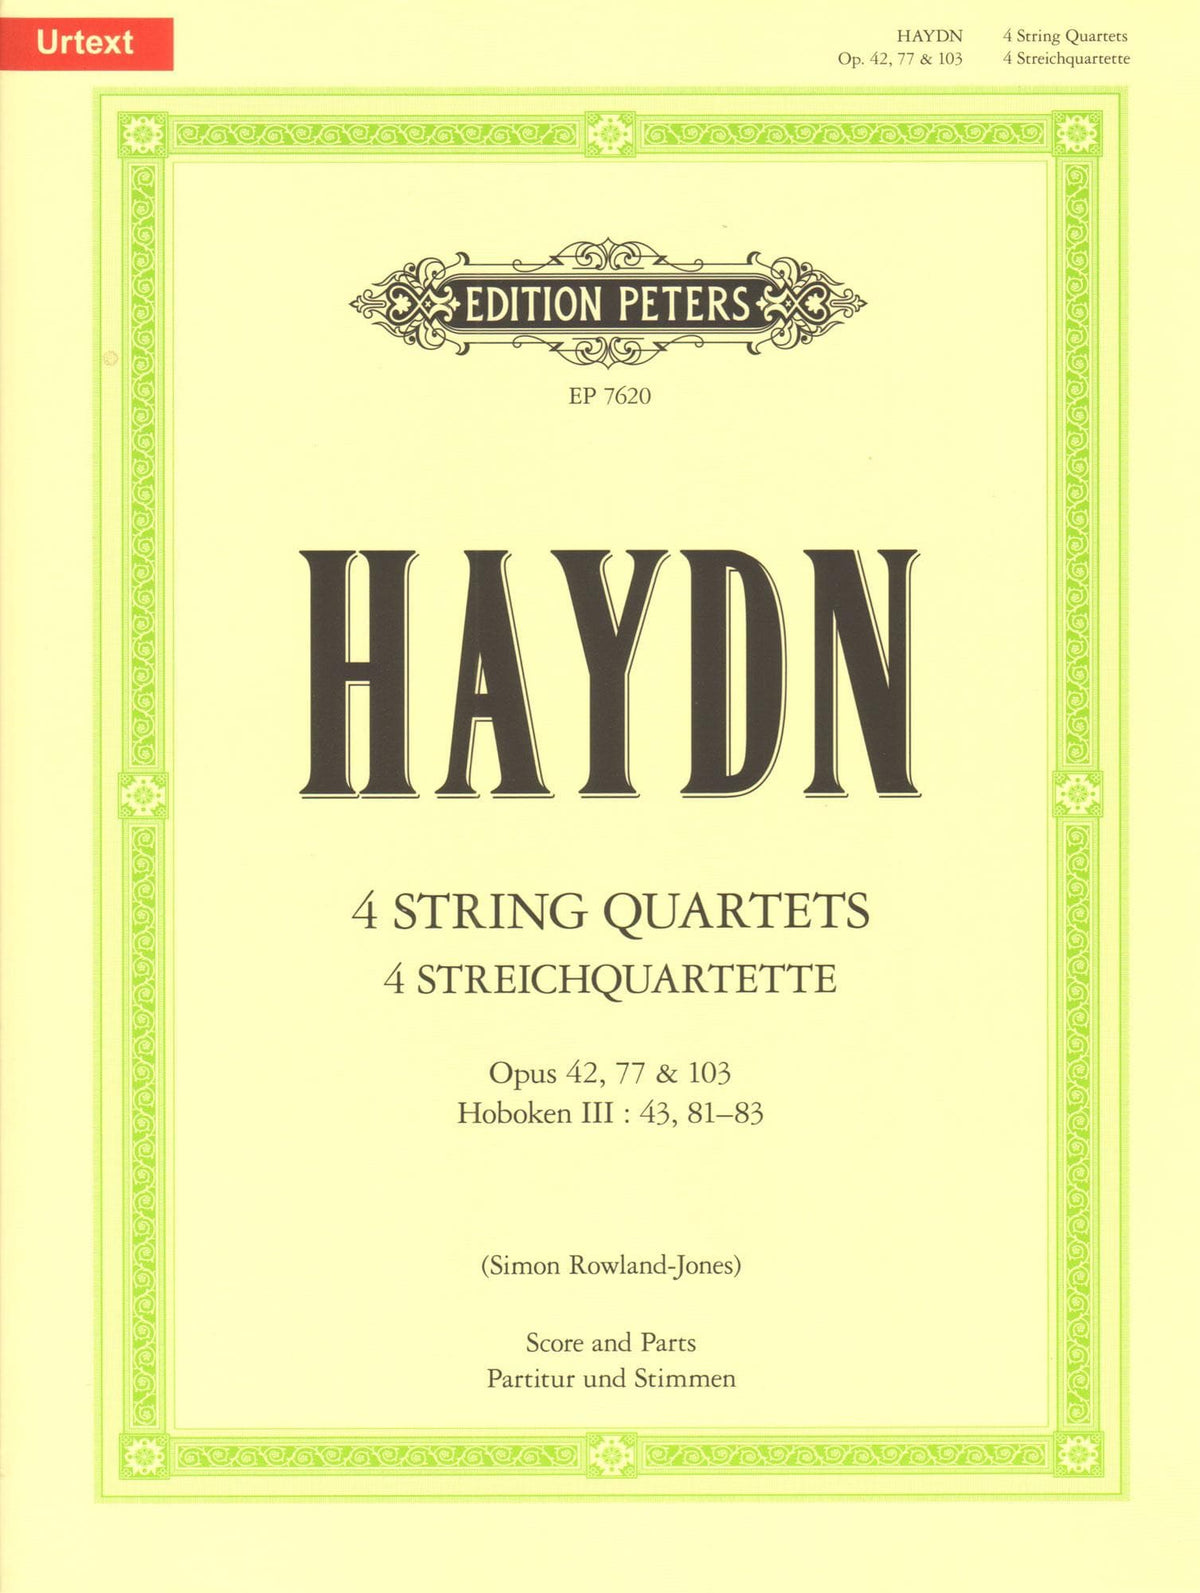 Haydn, Franz Joseph - 4 String Quartets, Op. 42, 77, 103 - Score and Parts - edited by Simon Rowland-Jones - Edition Peters URTEXT